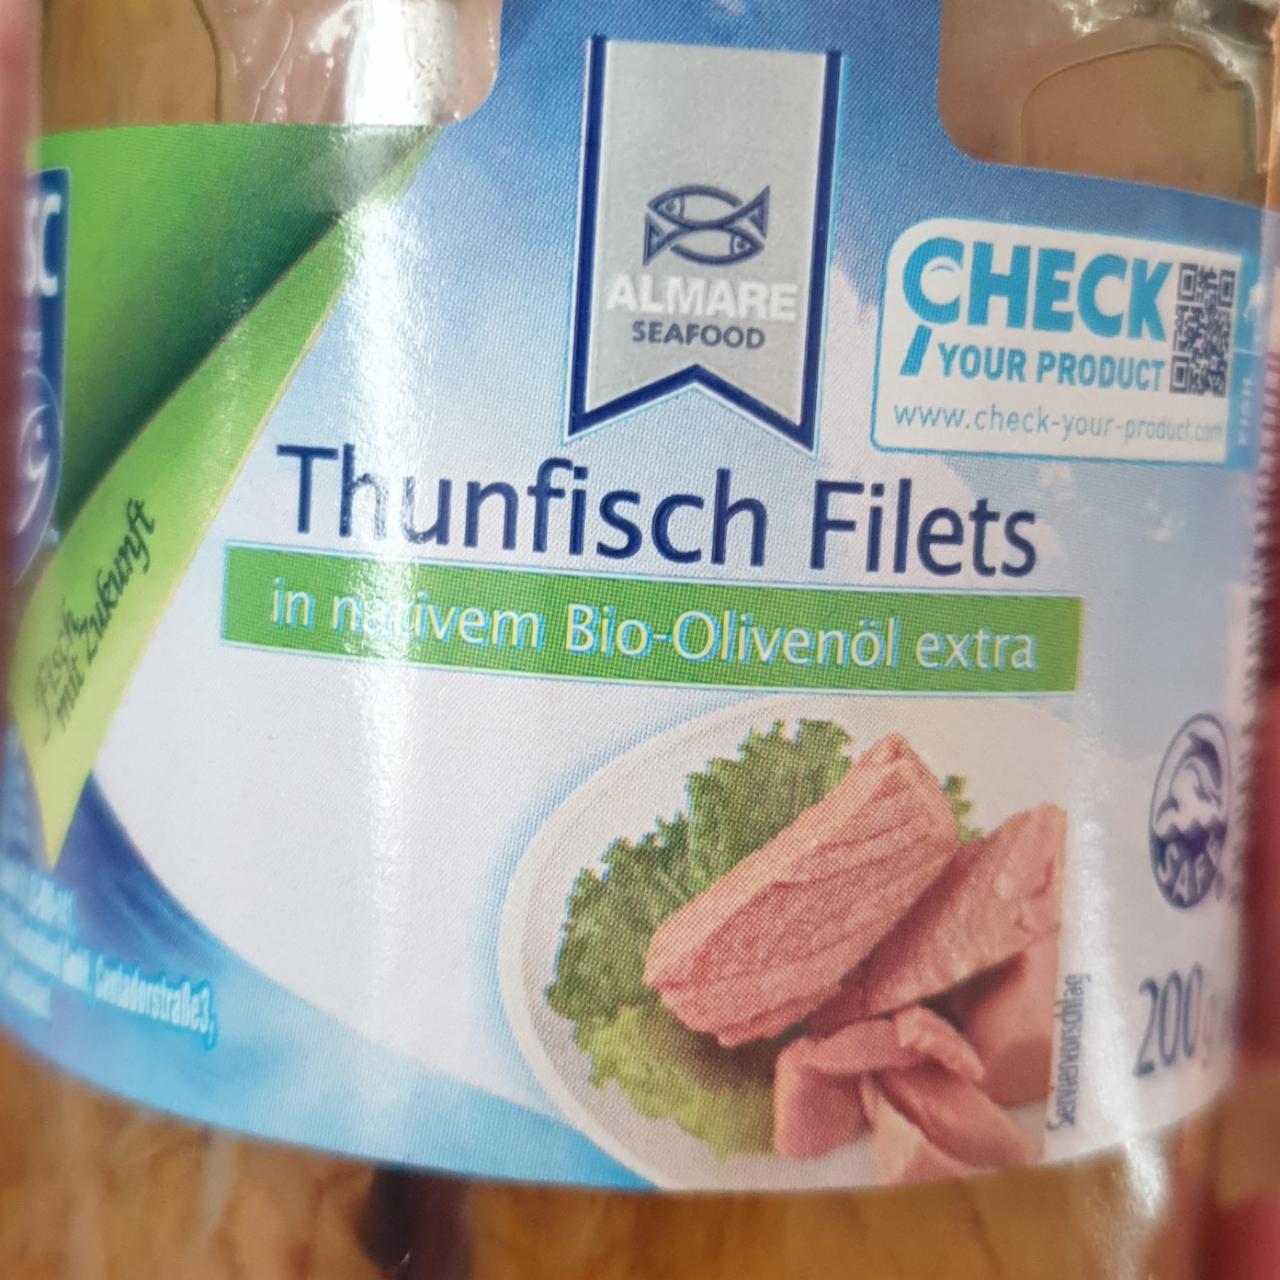 Fotografie - Thunfisch Filets in nativem Bio-Olivenöl extra Almare seafood